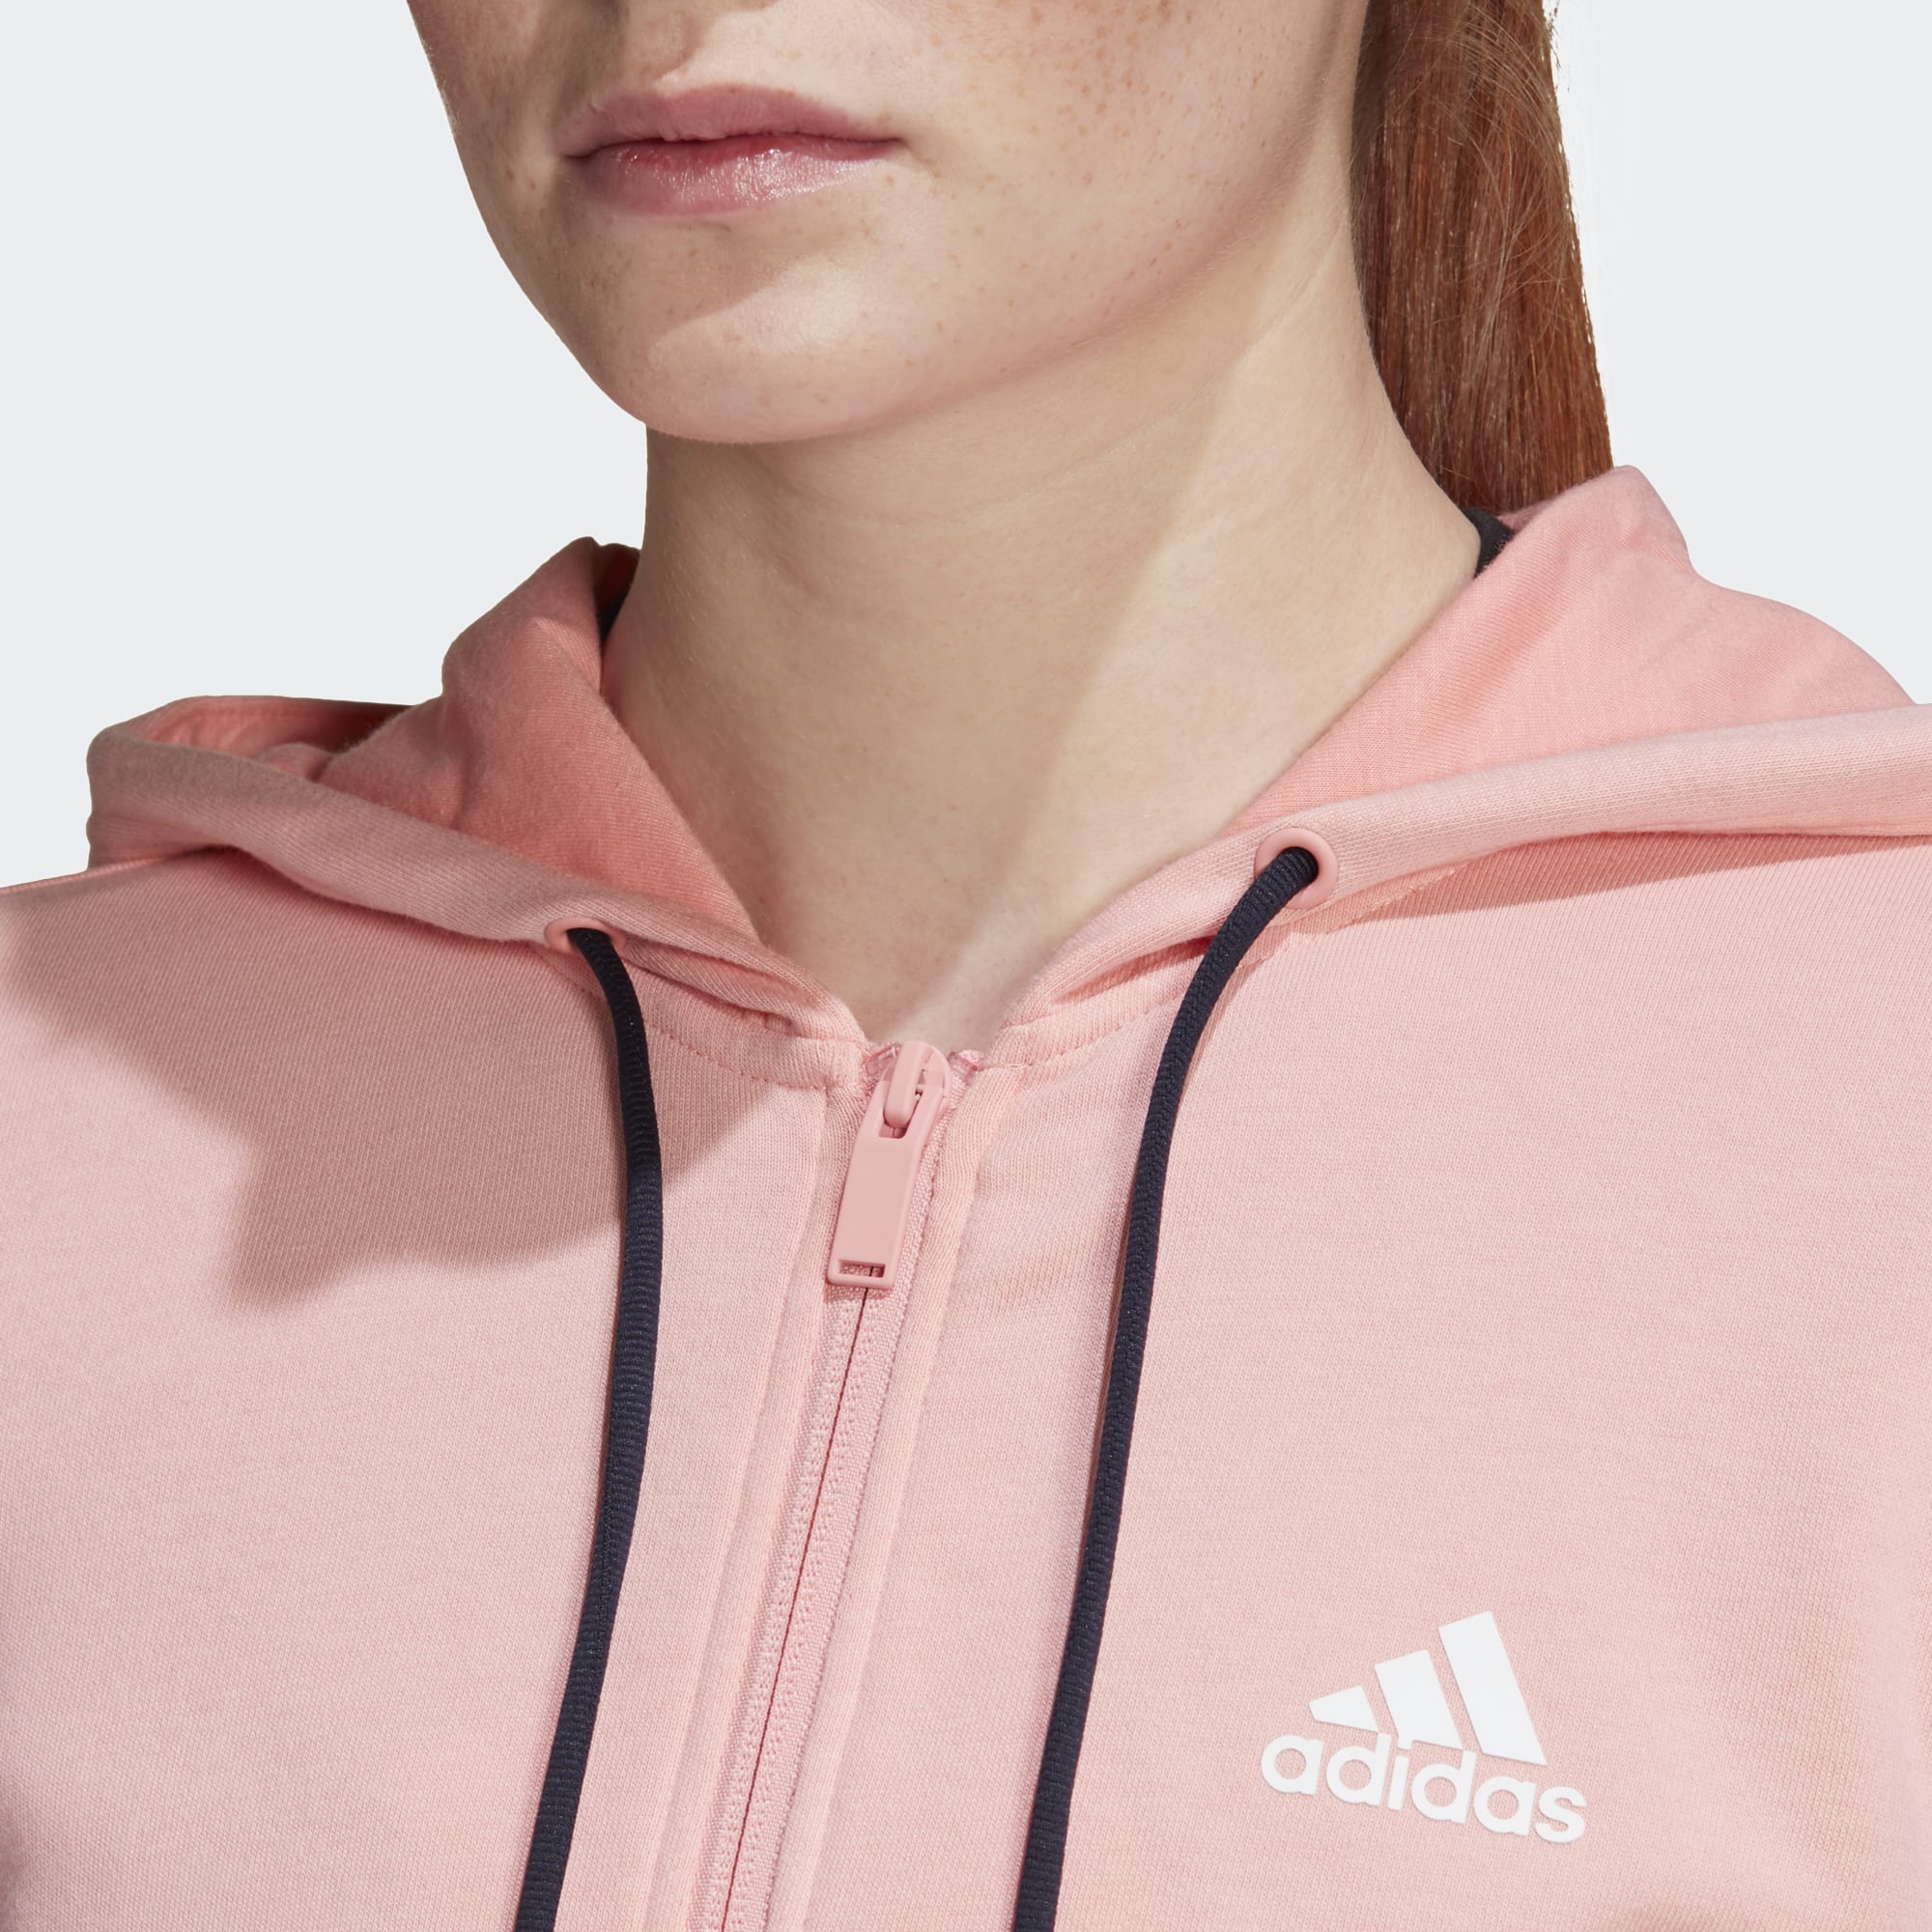 Adidas Energize Trainingsanzug Mädchen - pink/dunkelblau